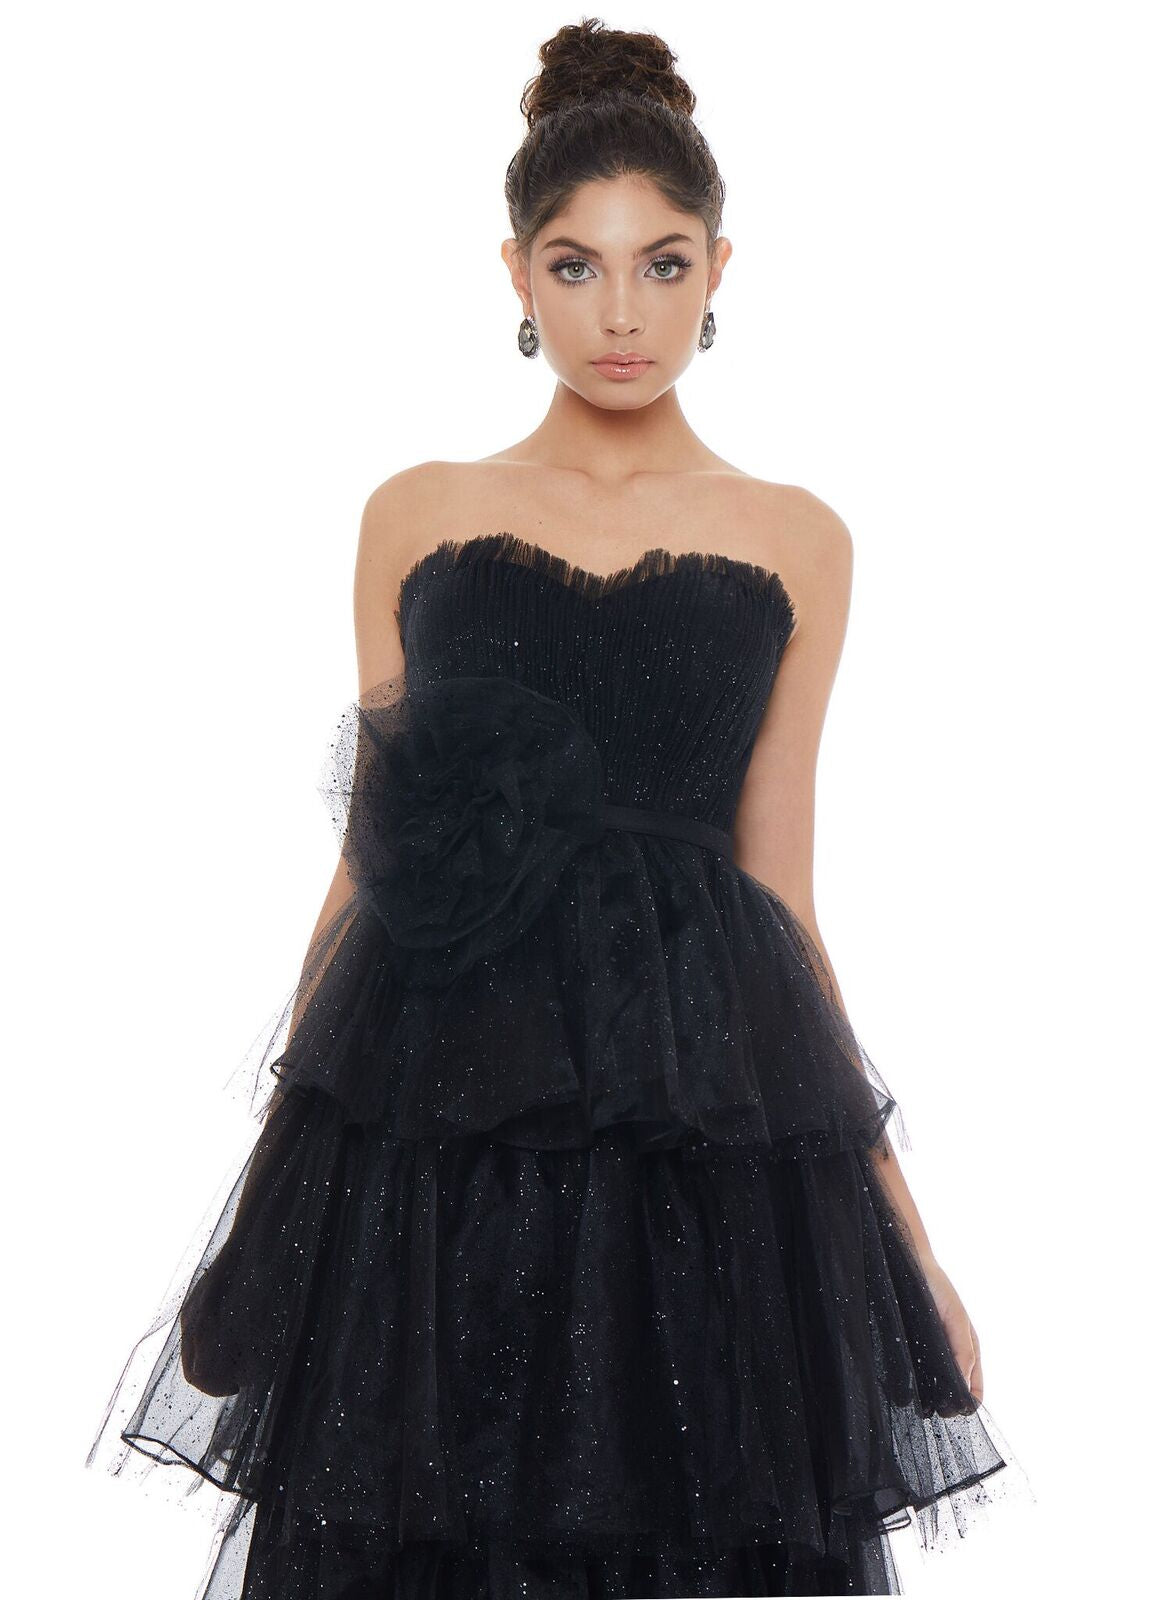 Ashley Lauren 1709 Glass Slipper Formals Lake City Florida Black Prom Dress Front View Formal Evening Dresses